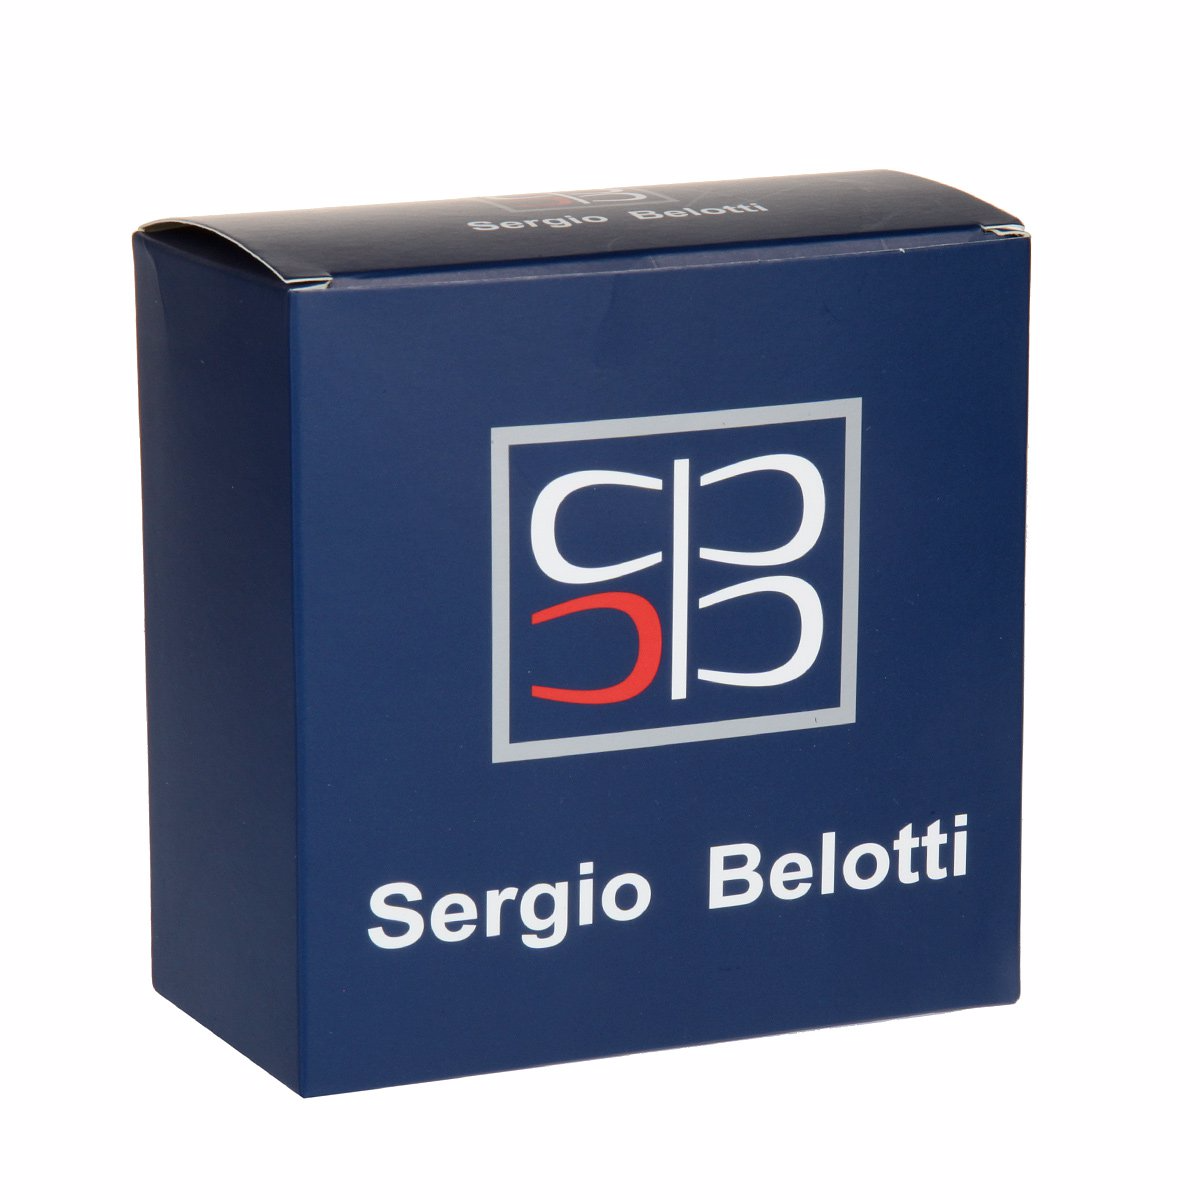 Ремень
Sergio Belotti
1020/45 Navy Ремни и пояса